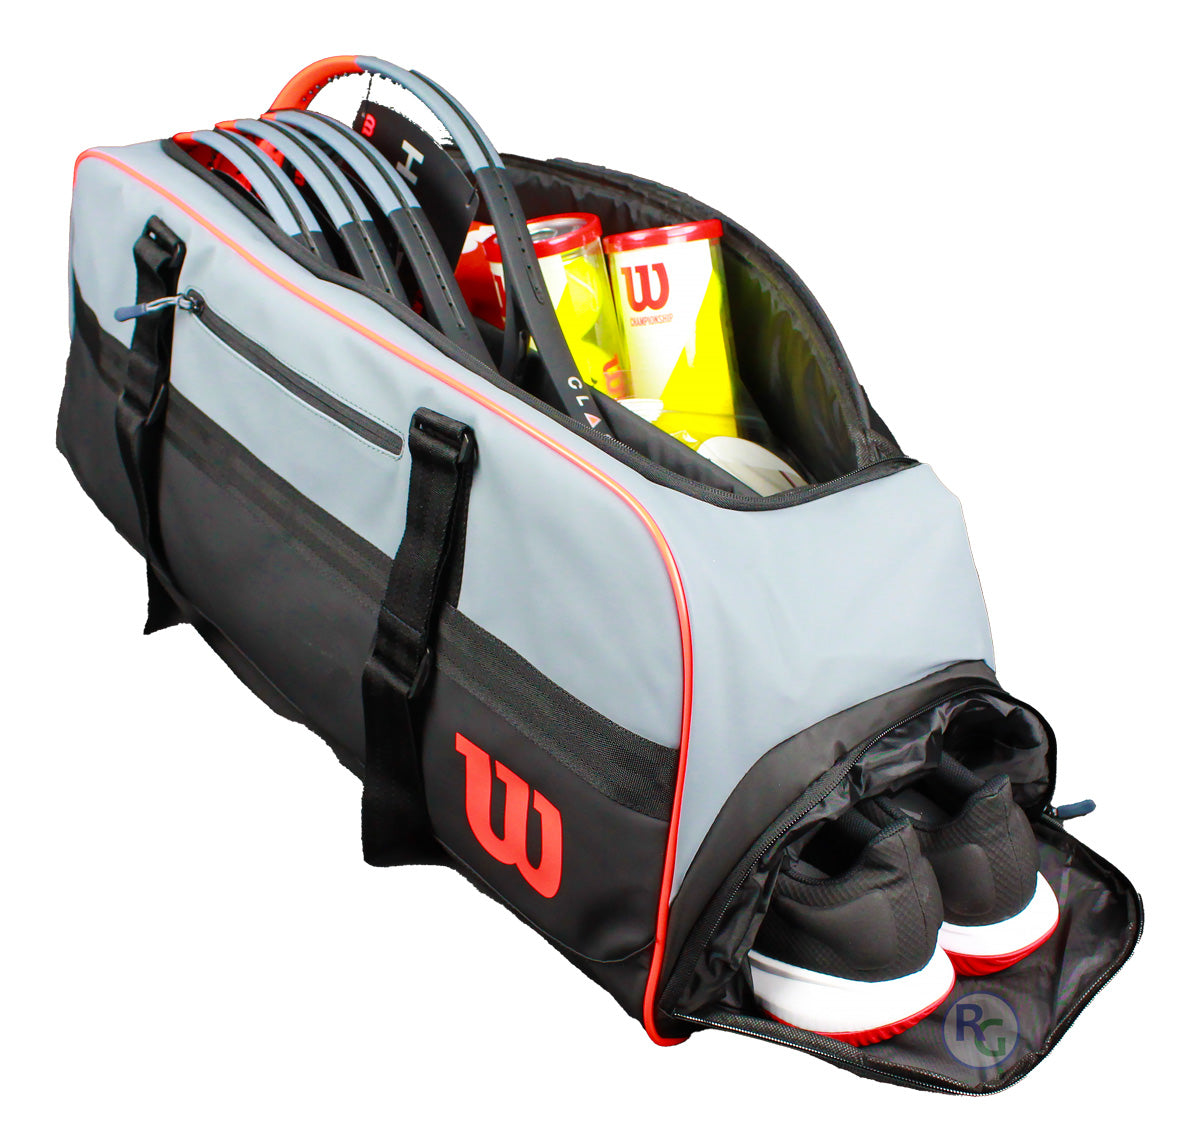 Tennis backpack|tennis bags for women|tennis racket bag,matein